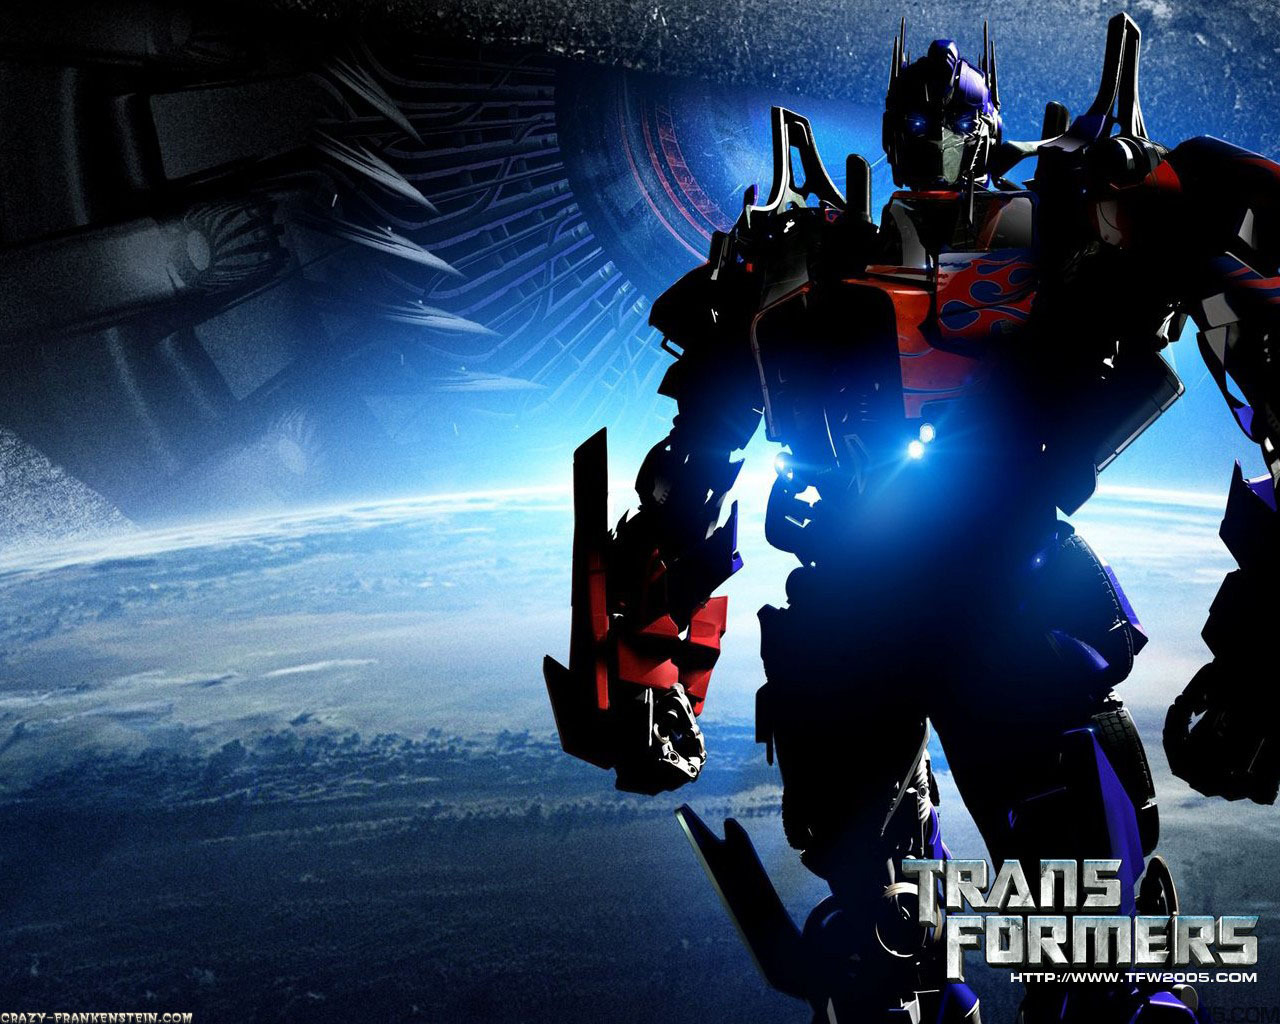 Optimus Prime Wallpapers fond dcran photos en HD